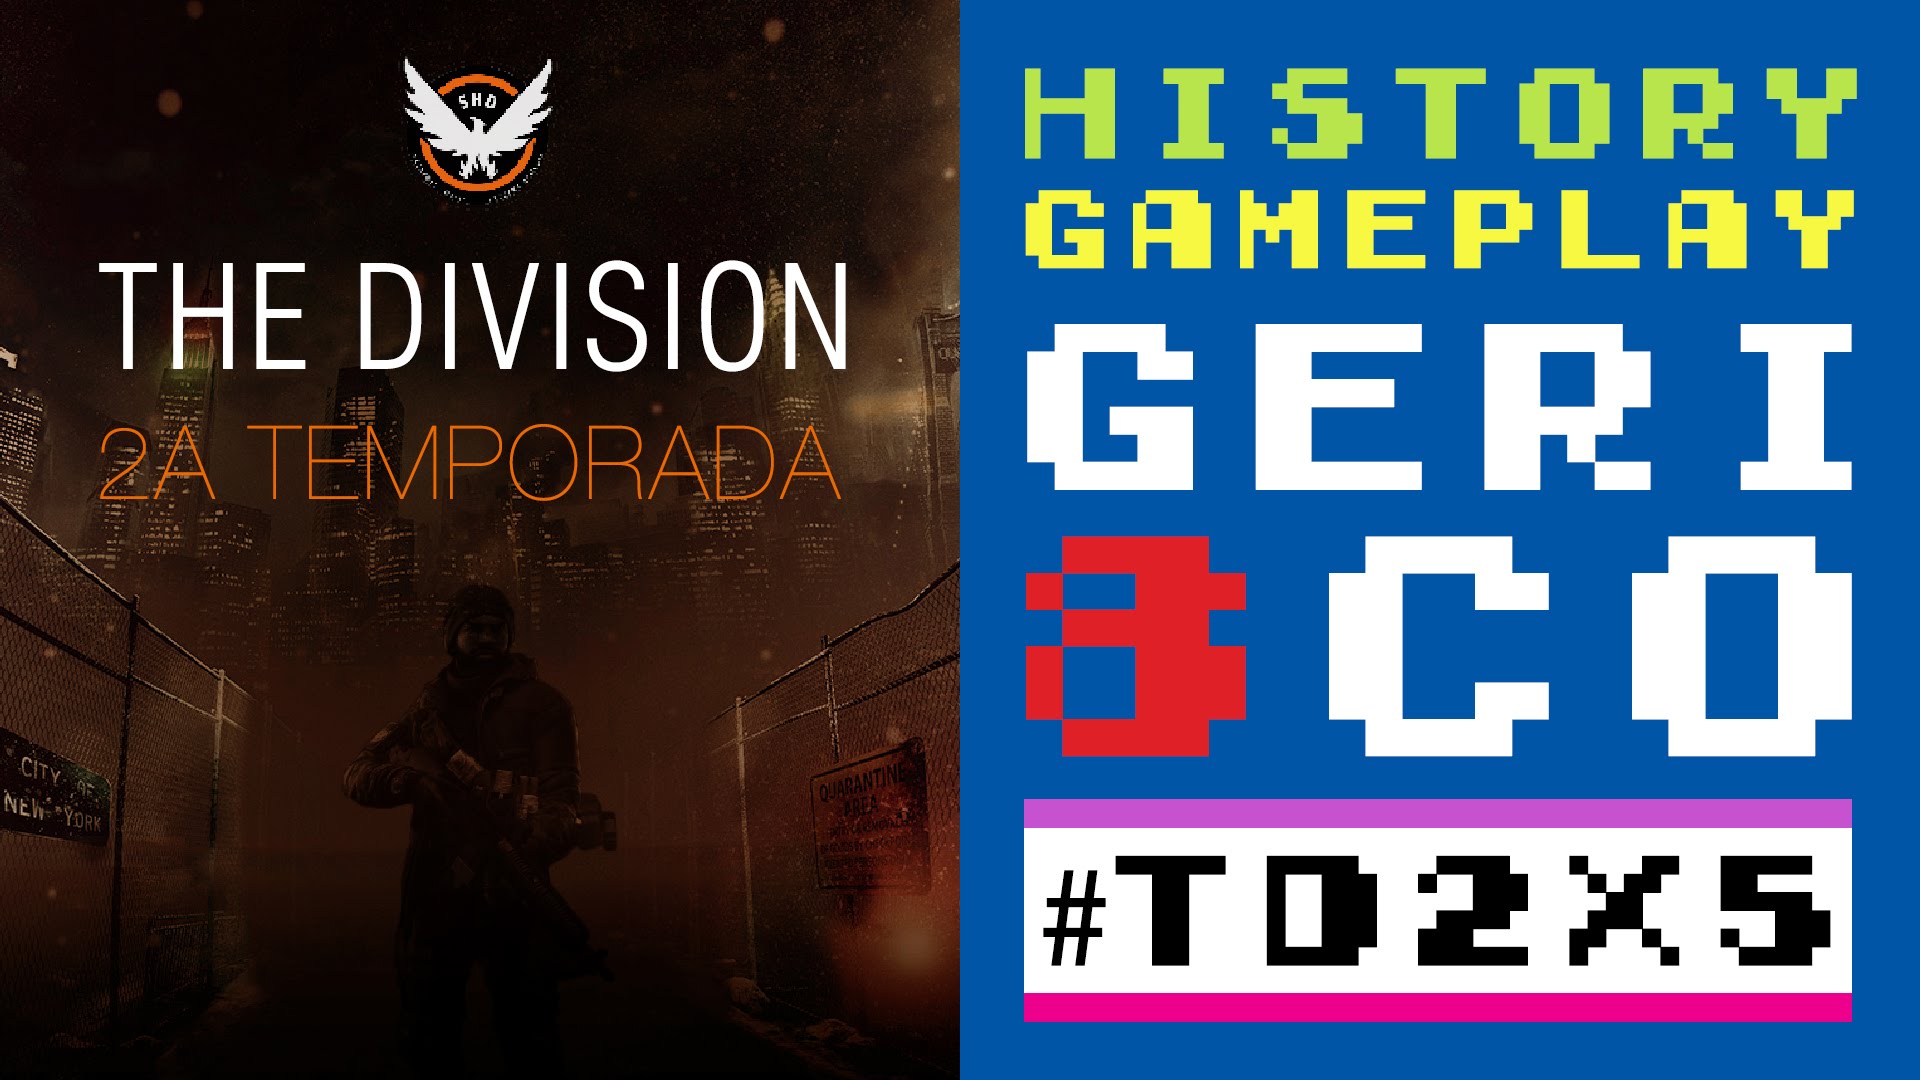 THE DIVISION 2A TEMPORADA (HISTORY GAMEPLAY) #TD2X5 de GERI8CO